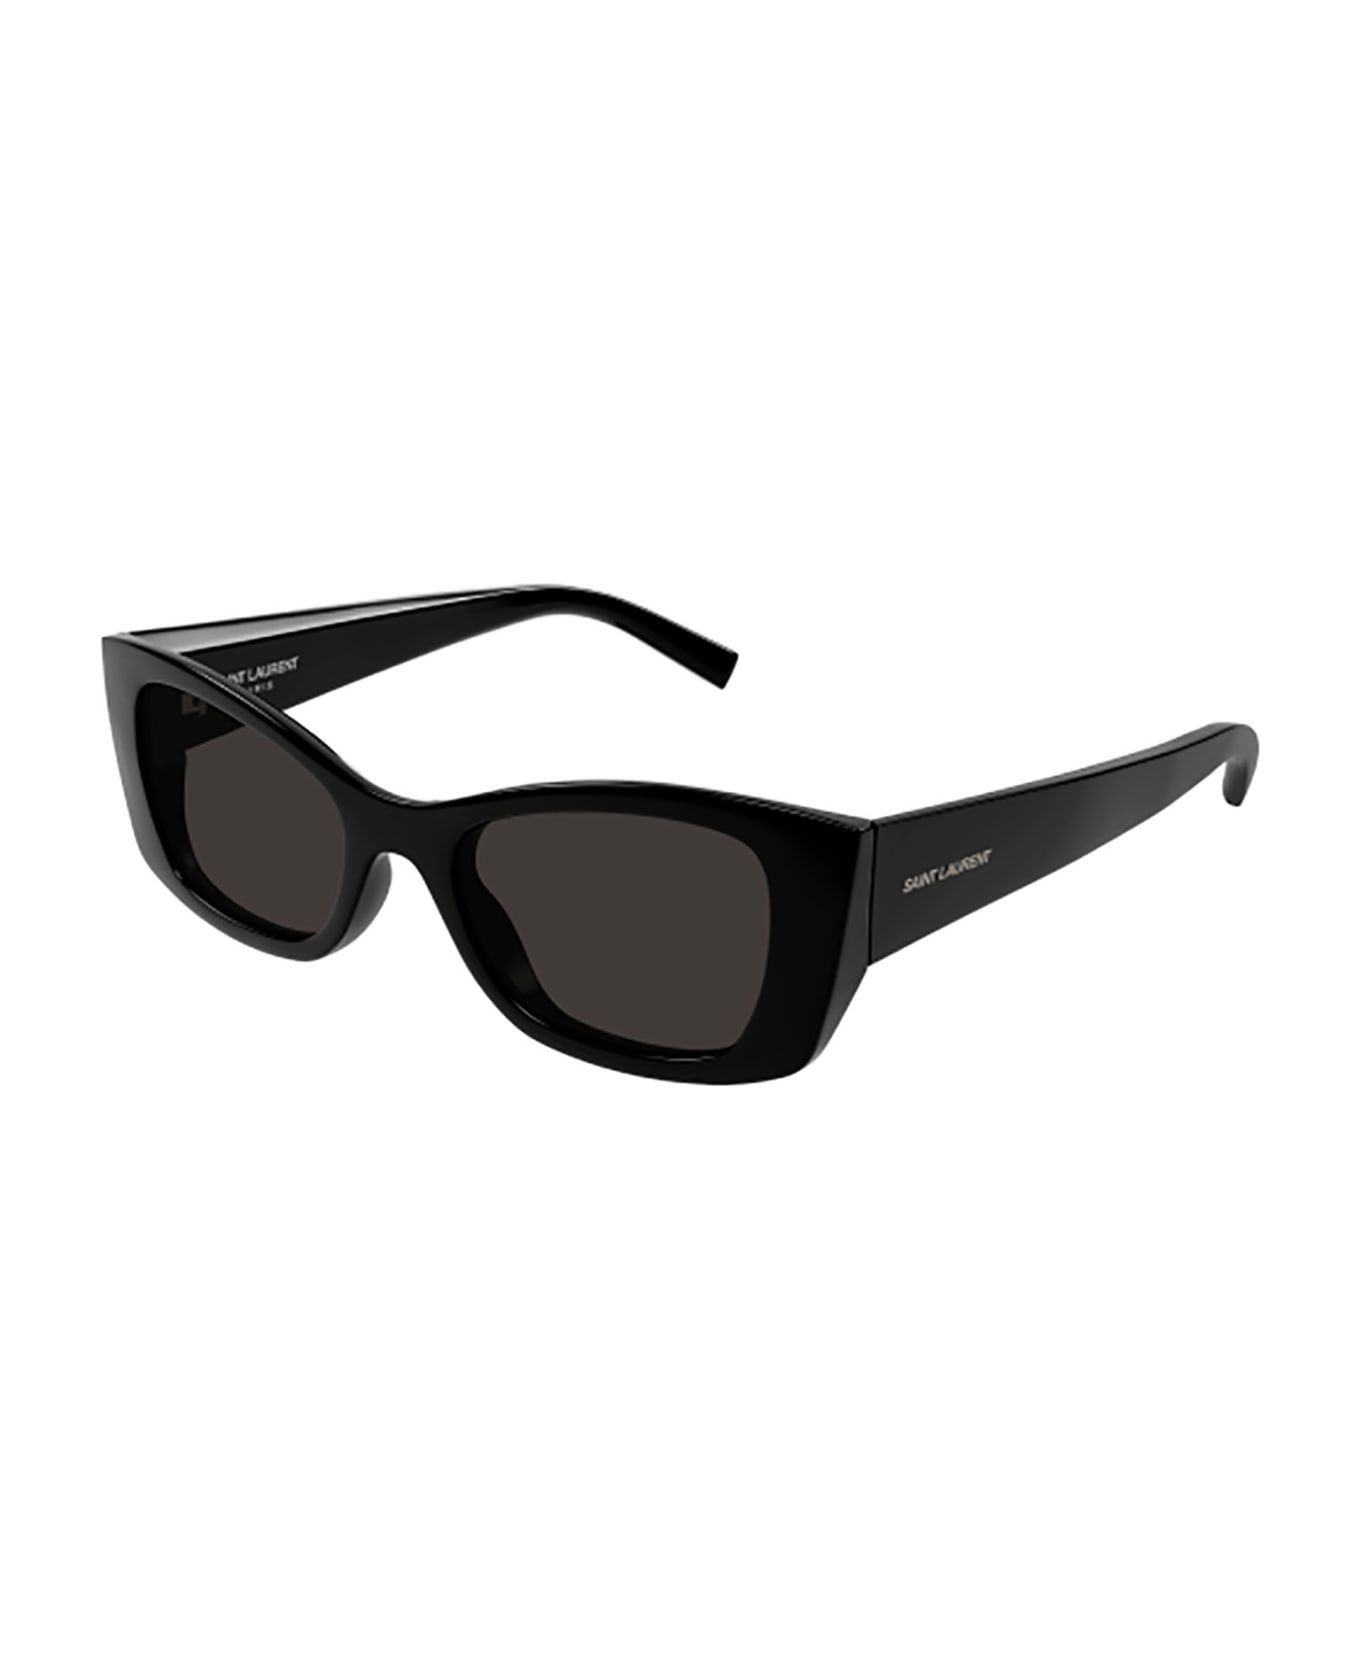 Saint Laurent Eyewear SL 593 Sunglasses - DB 7009 S round-frame sunglasses